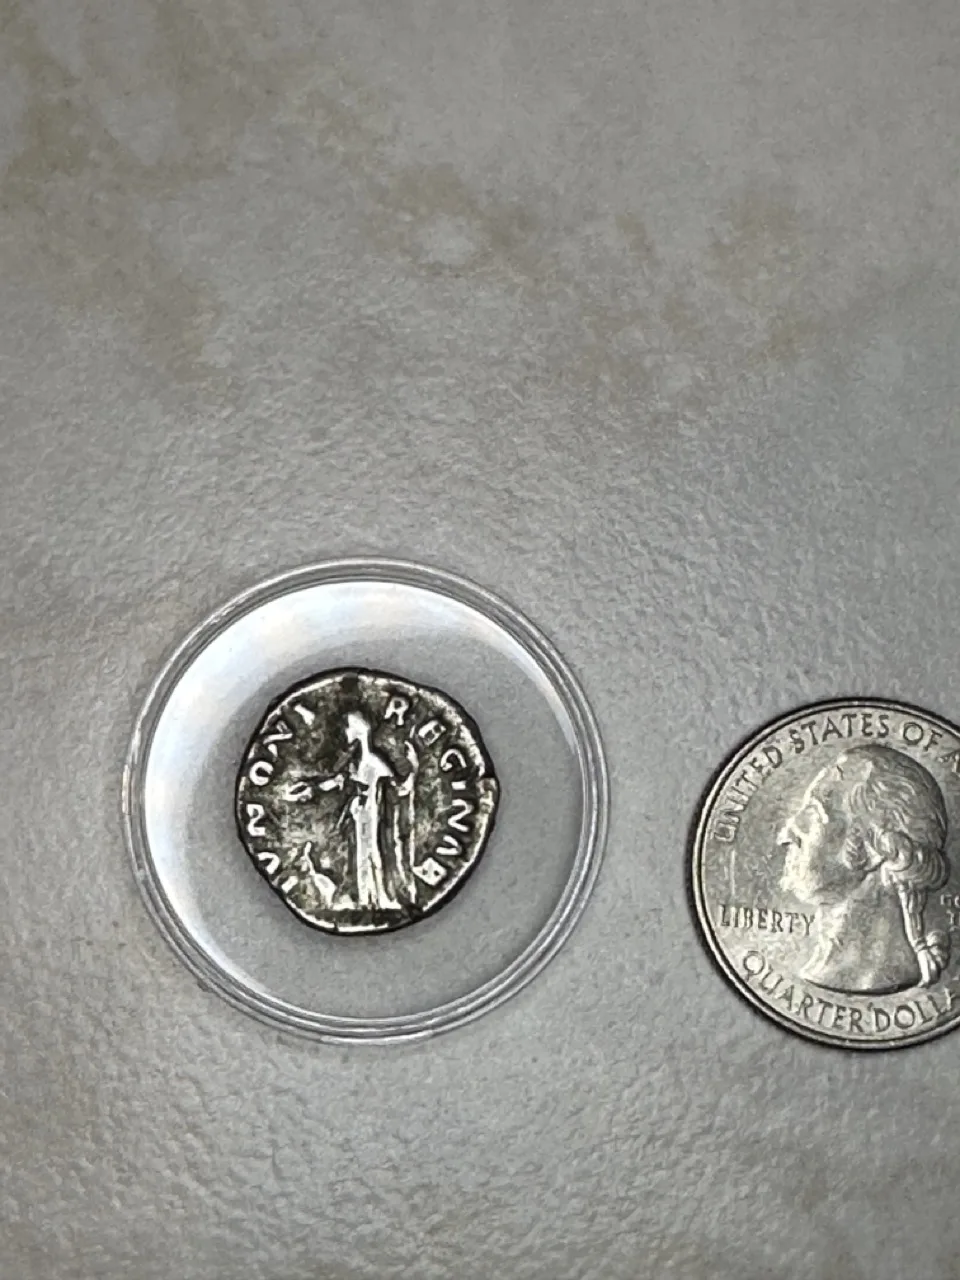 Roman Coin, 95-98% Silver, Sharp detail Prehistoric Online